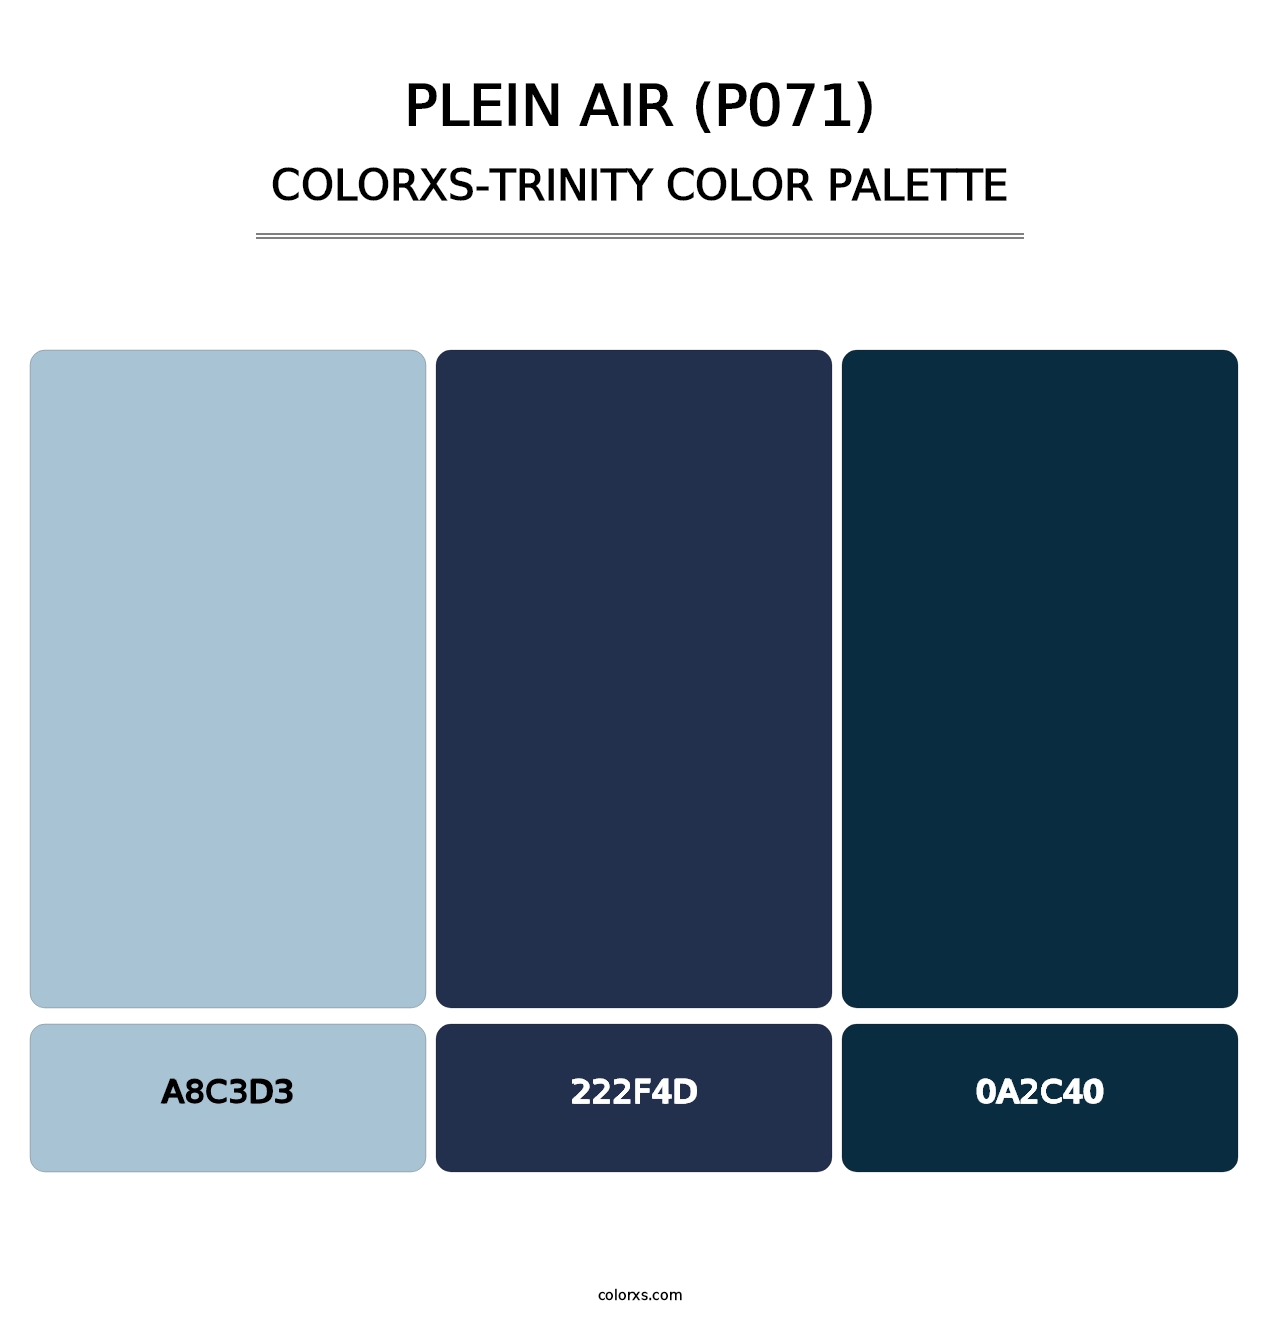 Plein Air (P071) - Colorxs Trinity Palette